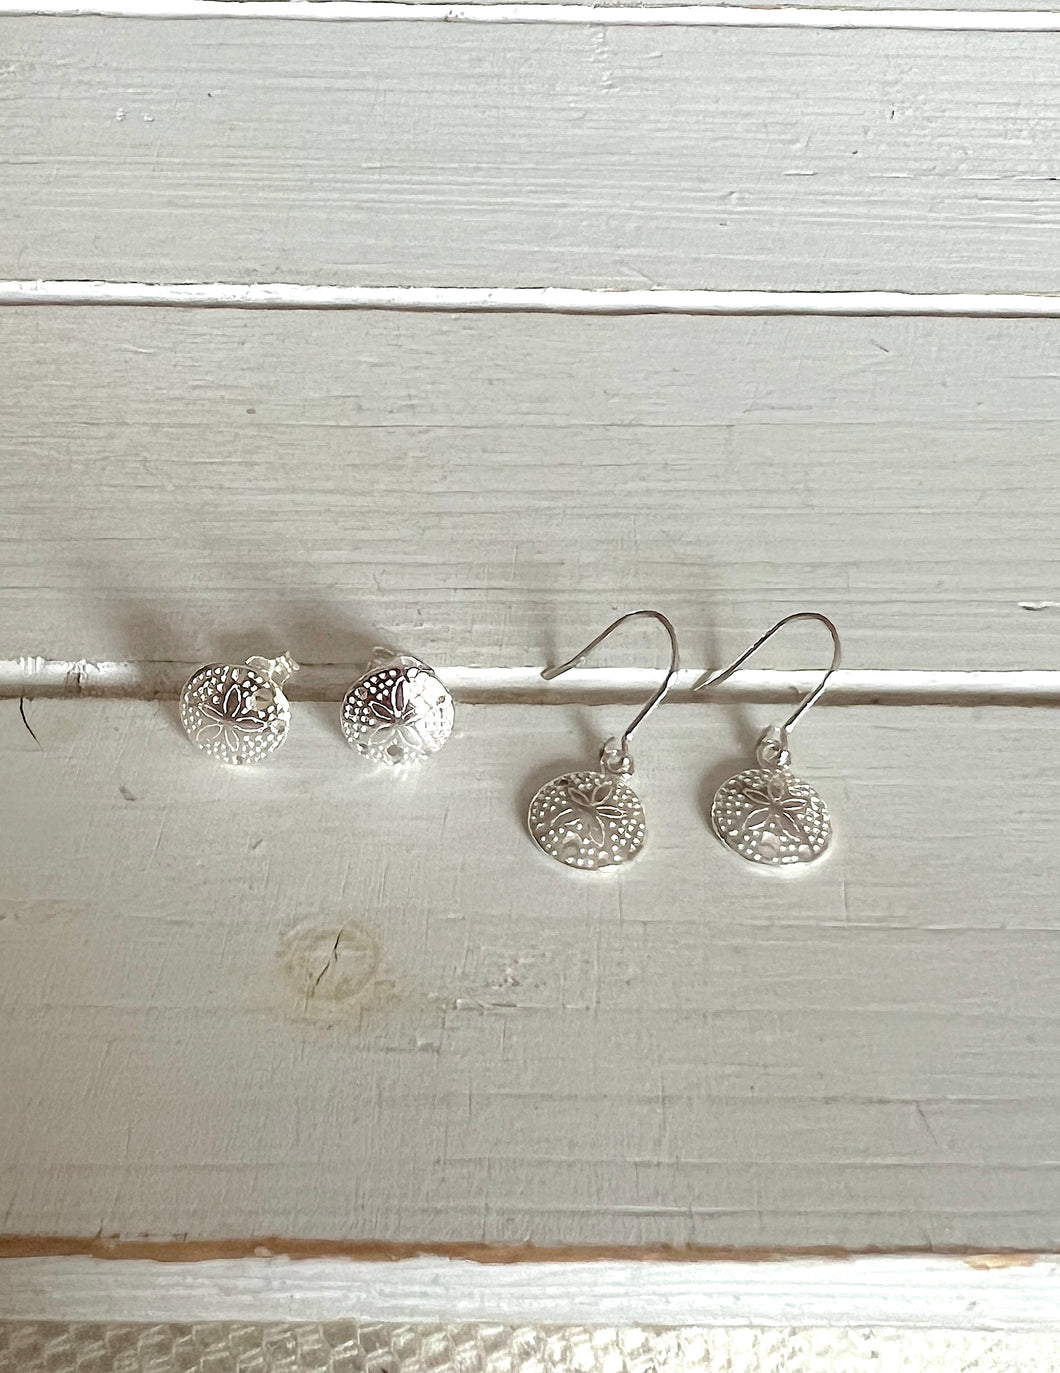 Sand Dollar earrings (medium)